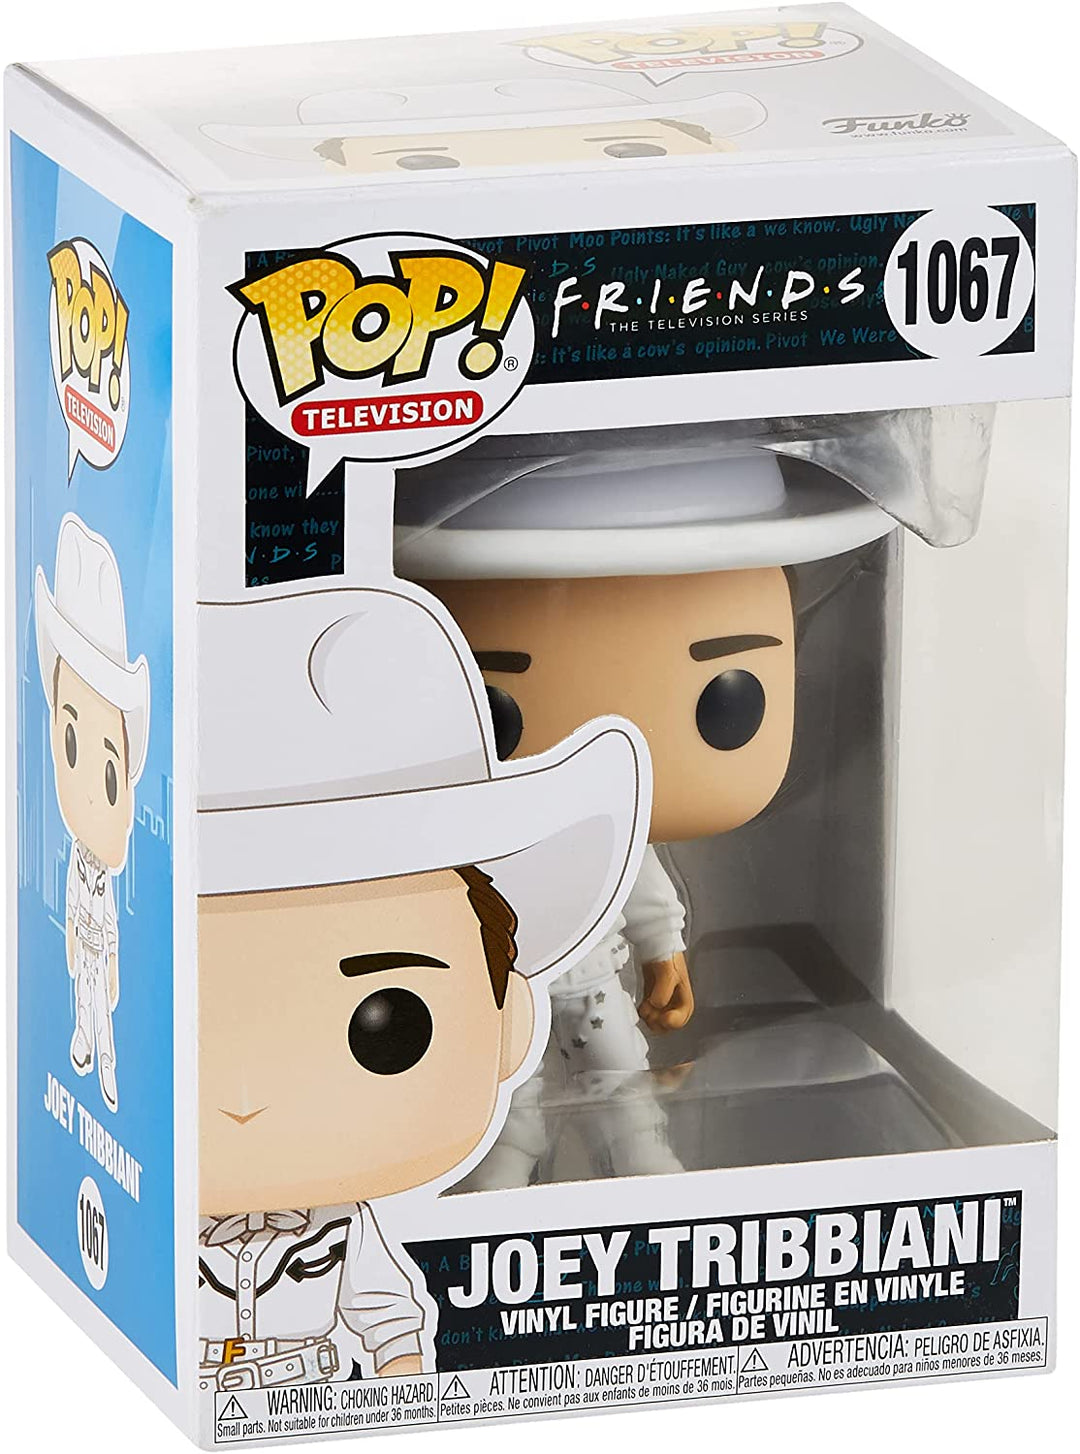 Freunde Die Fernsehserie Joey Tribbiani Funko 41953 Pop! Vinyl #1067